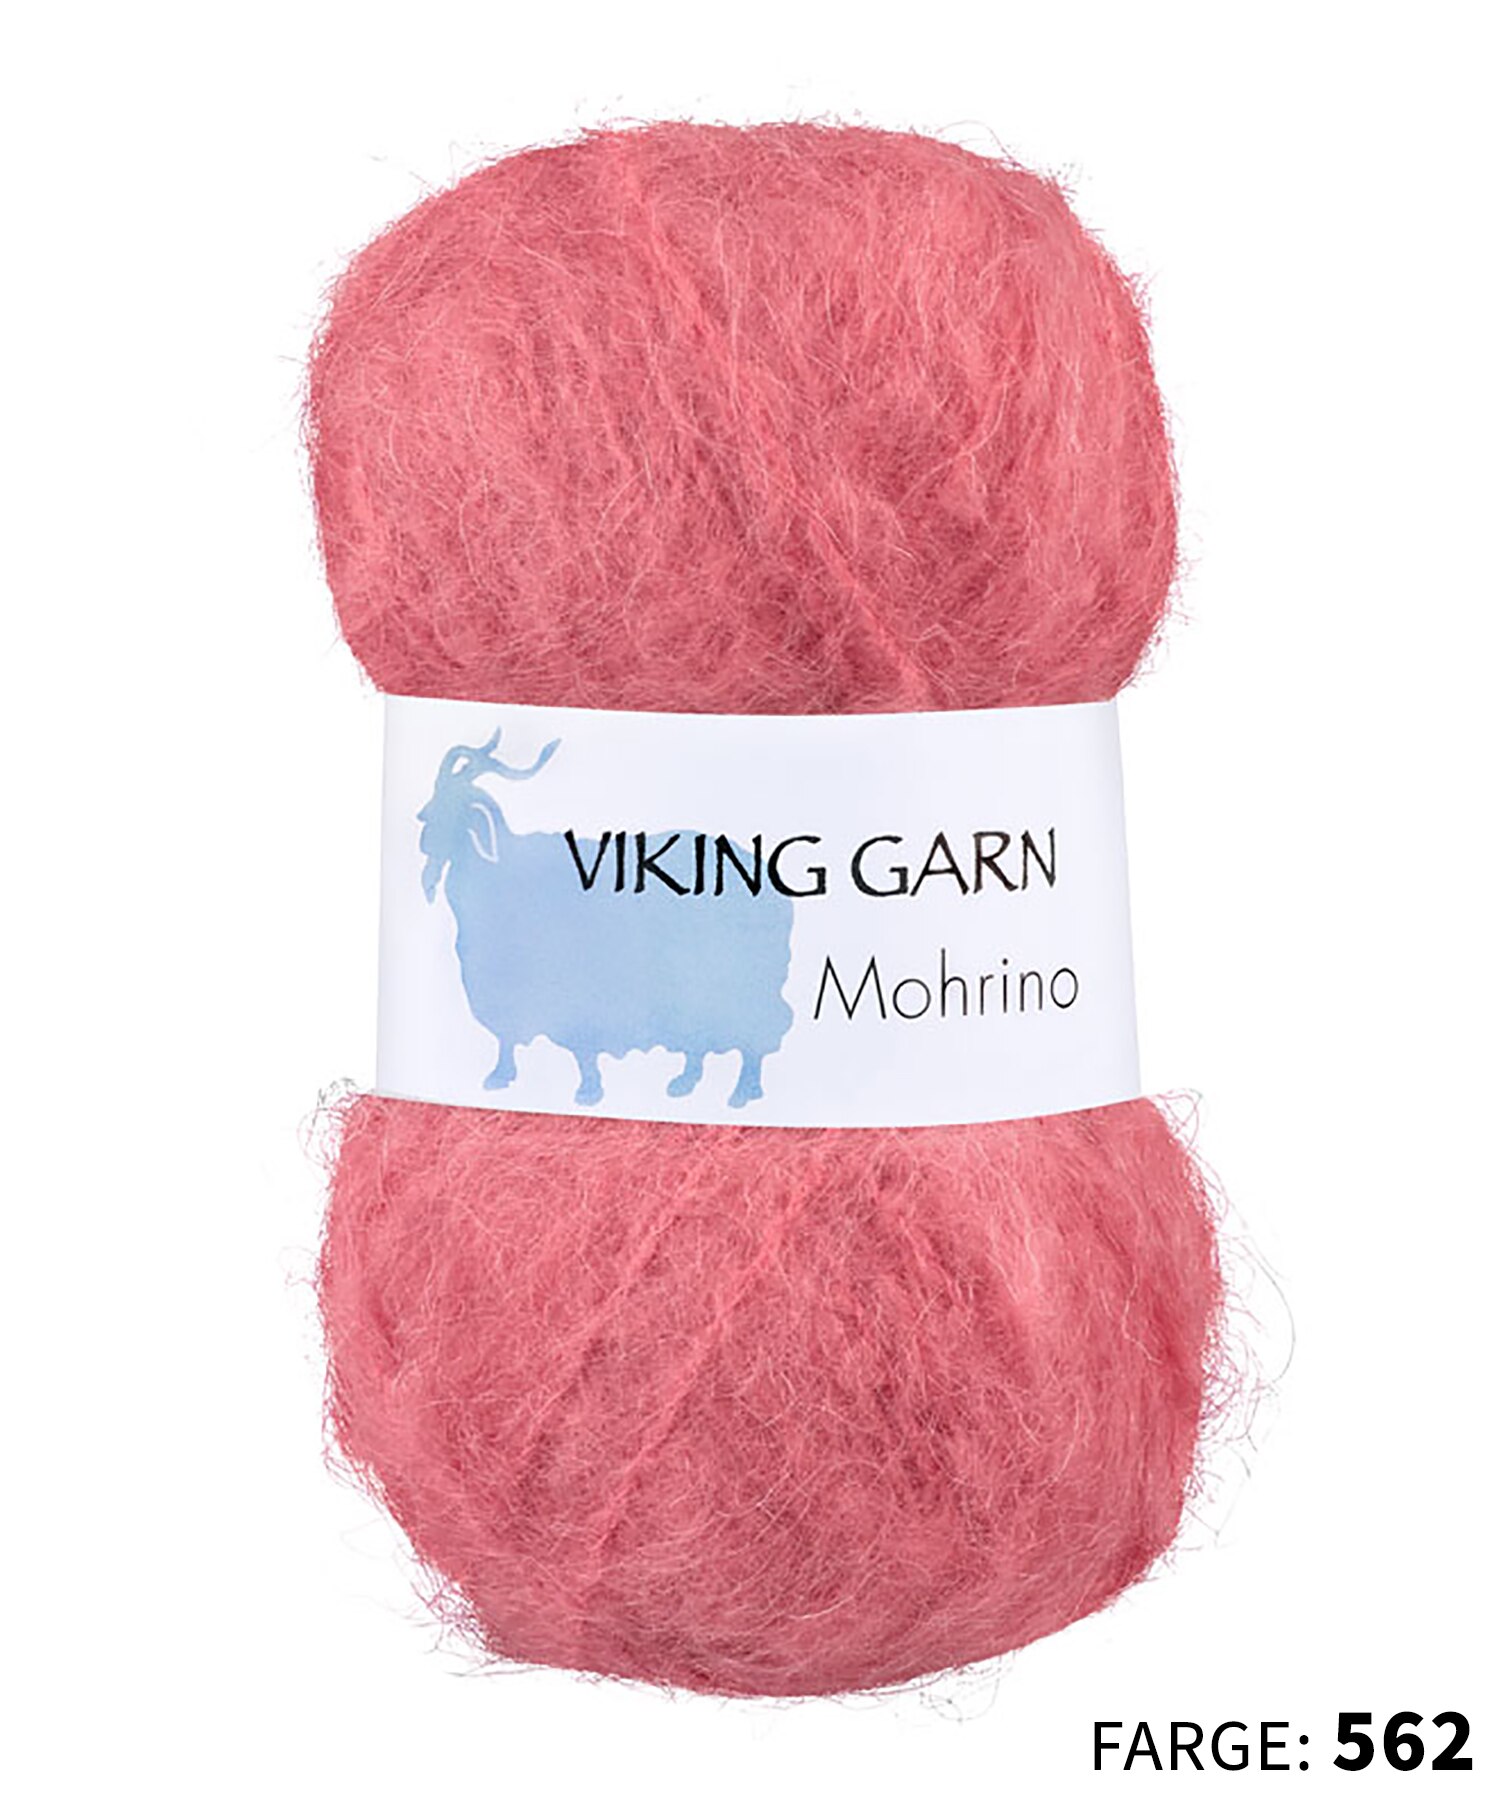 Viking Garn Mohrino